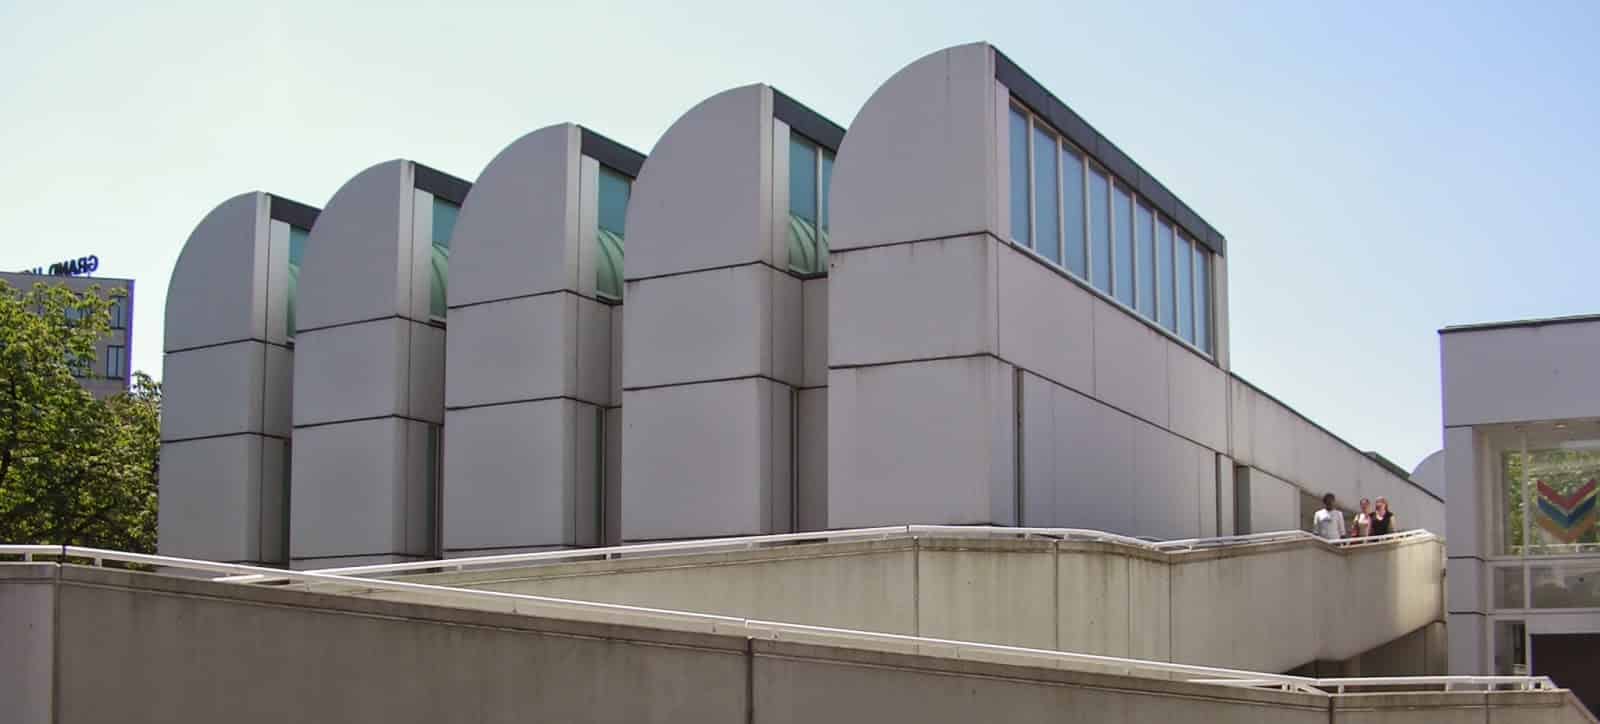 Walter Gropius' Bauhaus Archiv